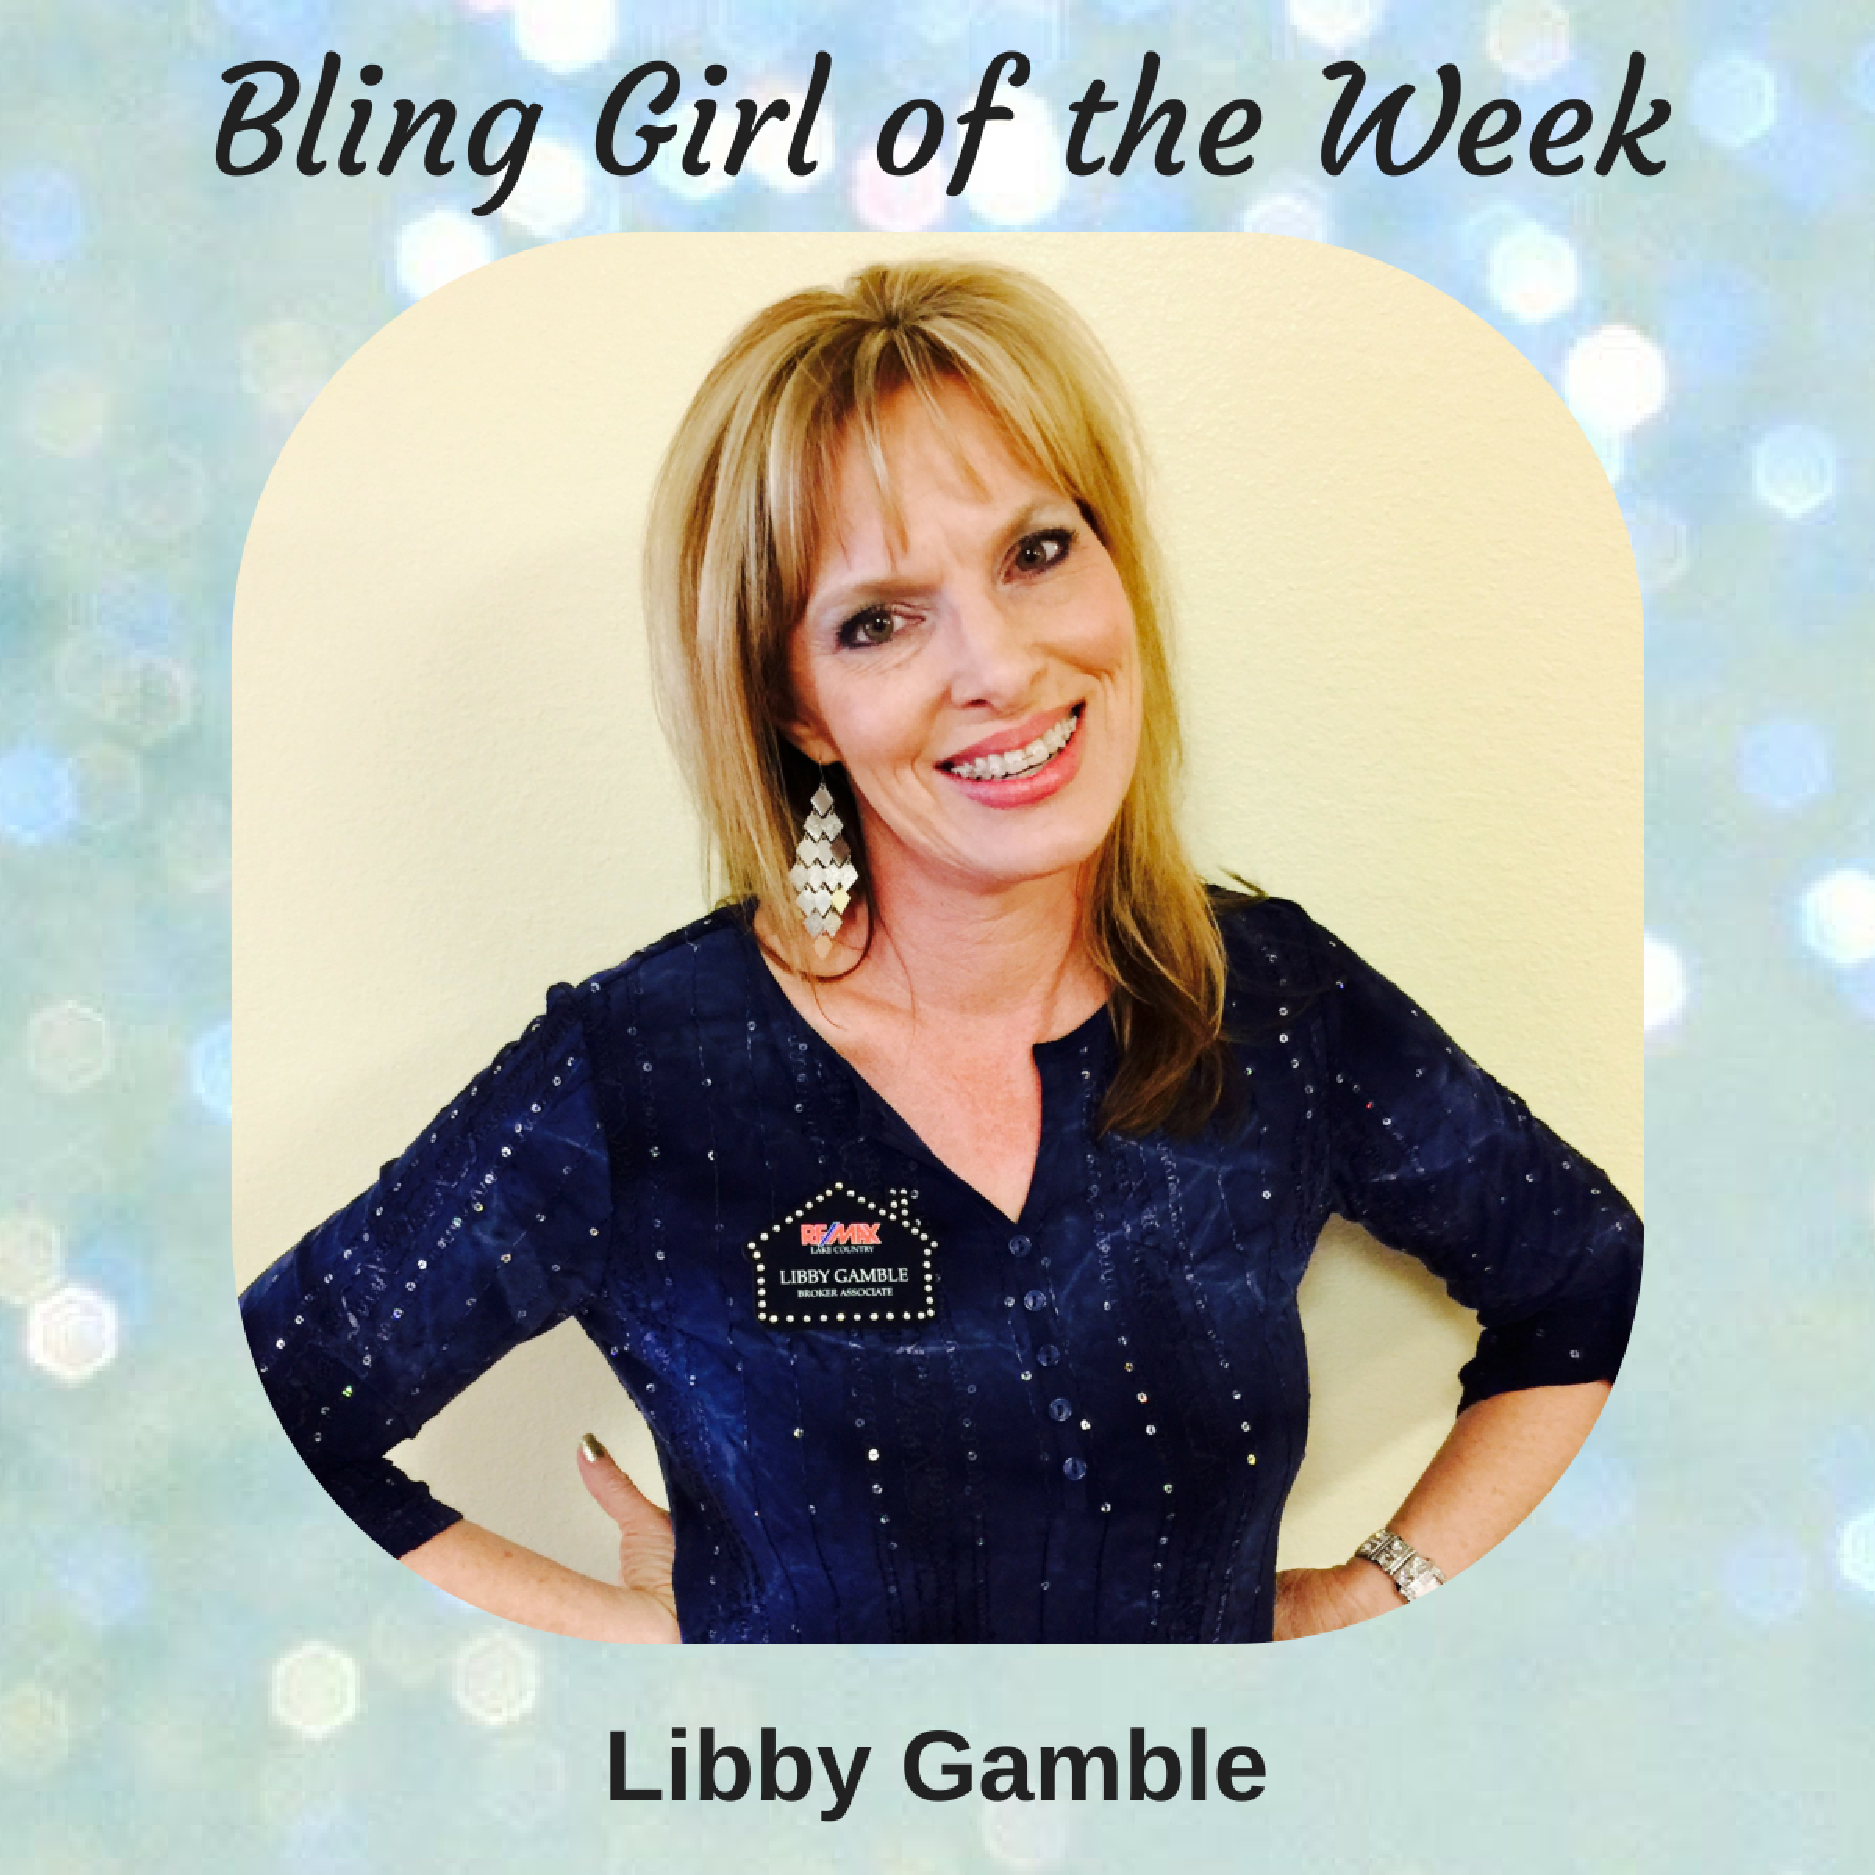 Libby Gamble